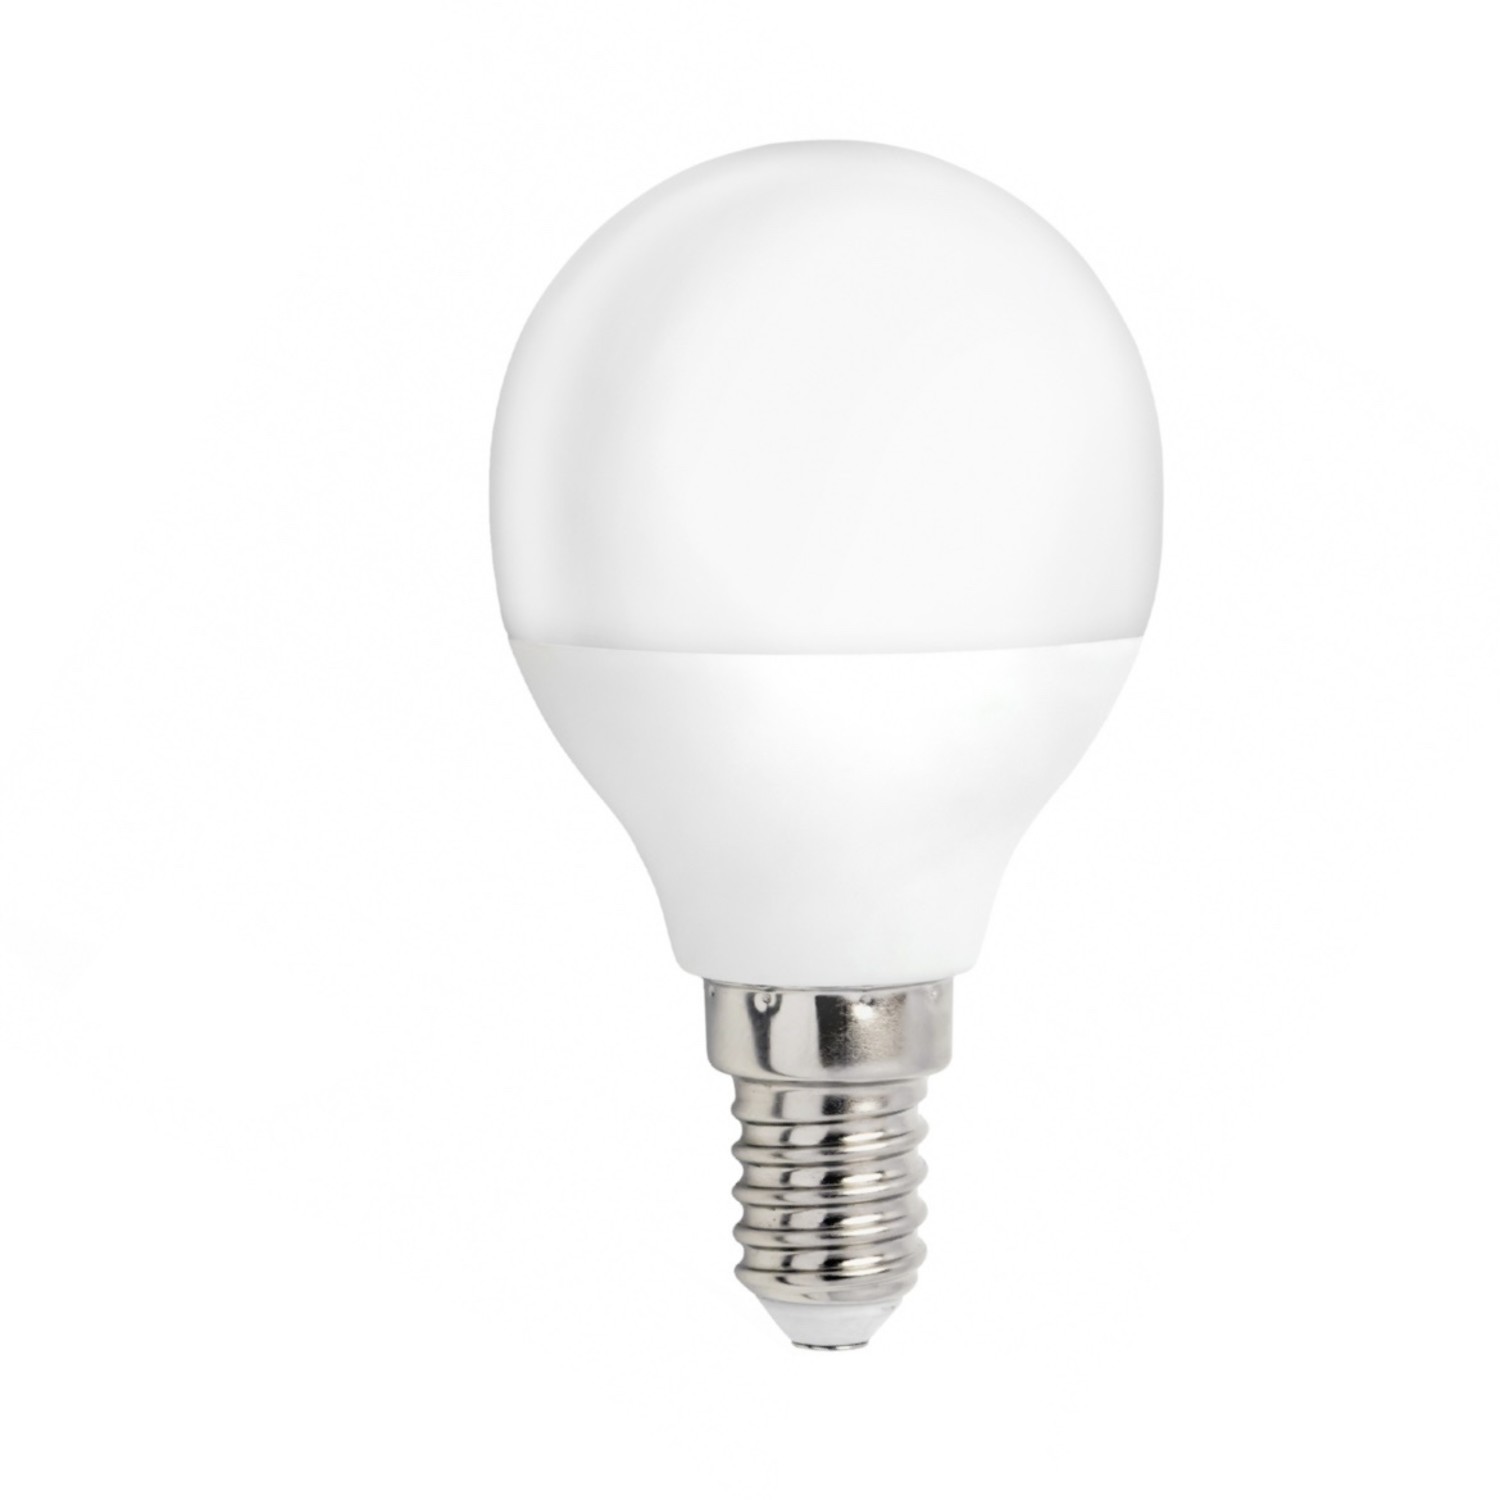 D.w.z Lach Onveilig LED lamp - E14 fitting - 4W vervangt 30W - Warm wit licht 3000K -  Ledlichtdiscounter.nl